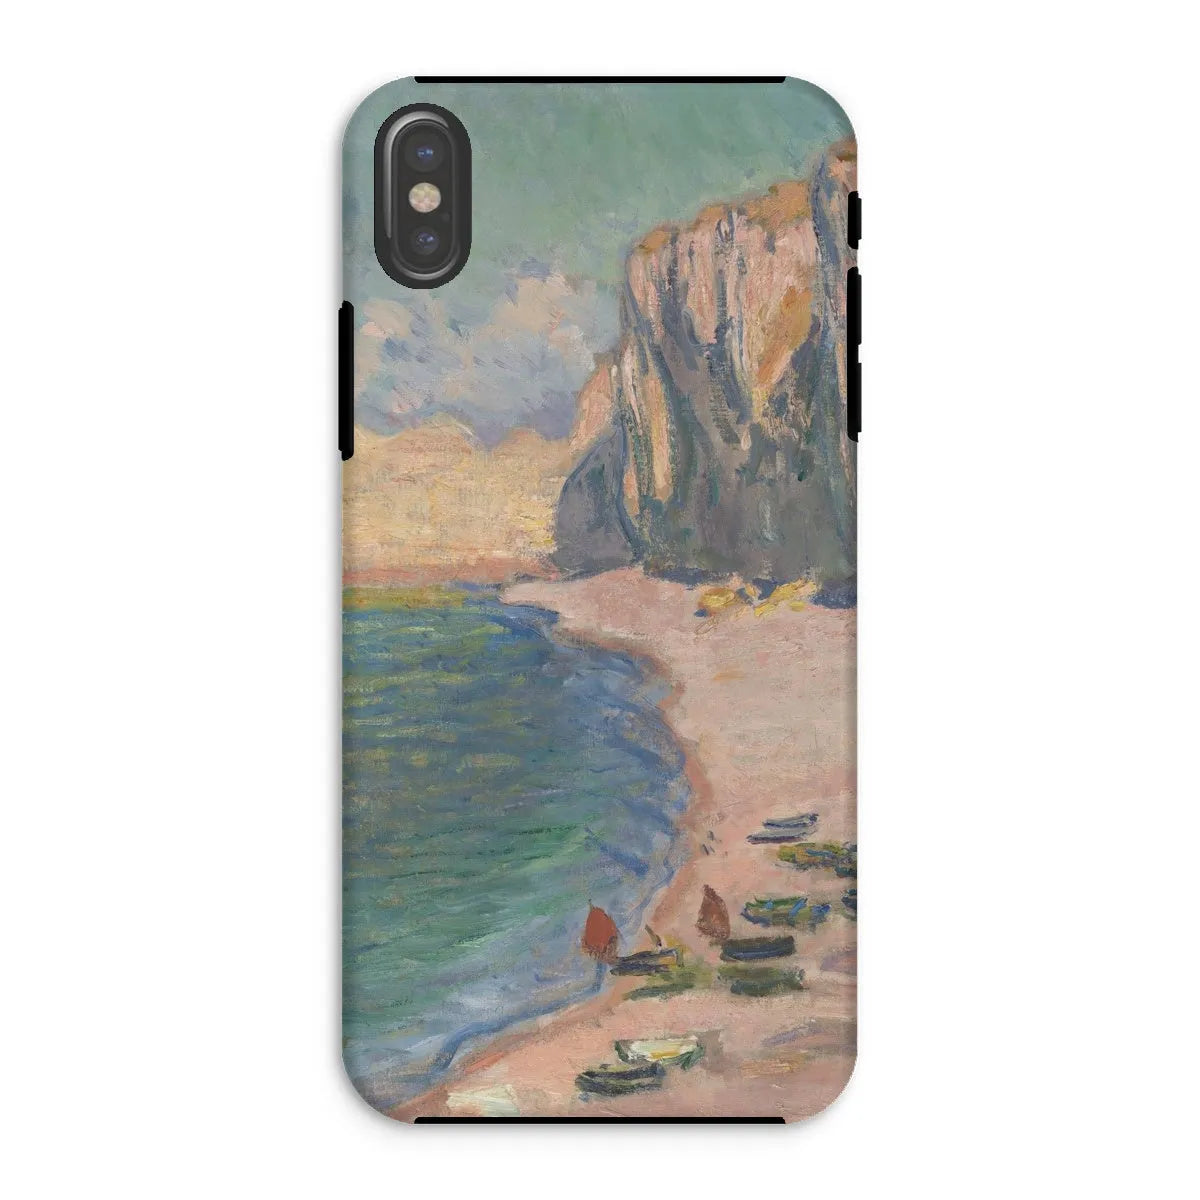 étretat - Impressionist Art Phone Case - Claude Monet - Iphone Xs / Matte - Mobile Phone Cases - Aesthetic Art